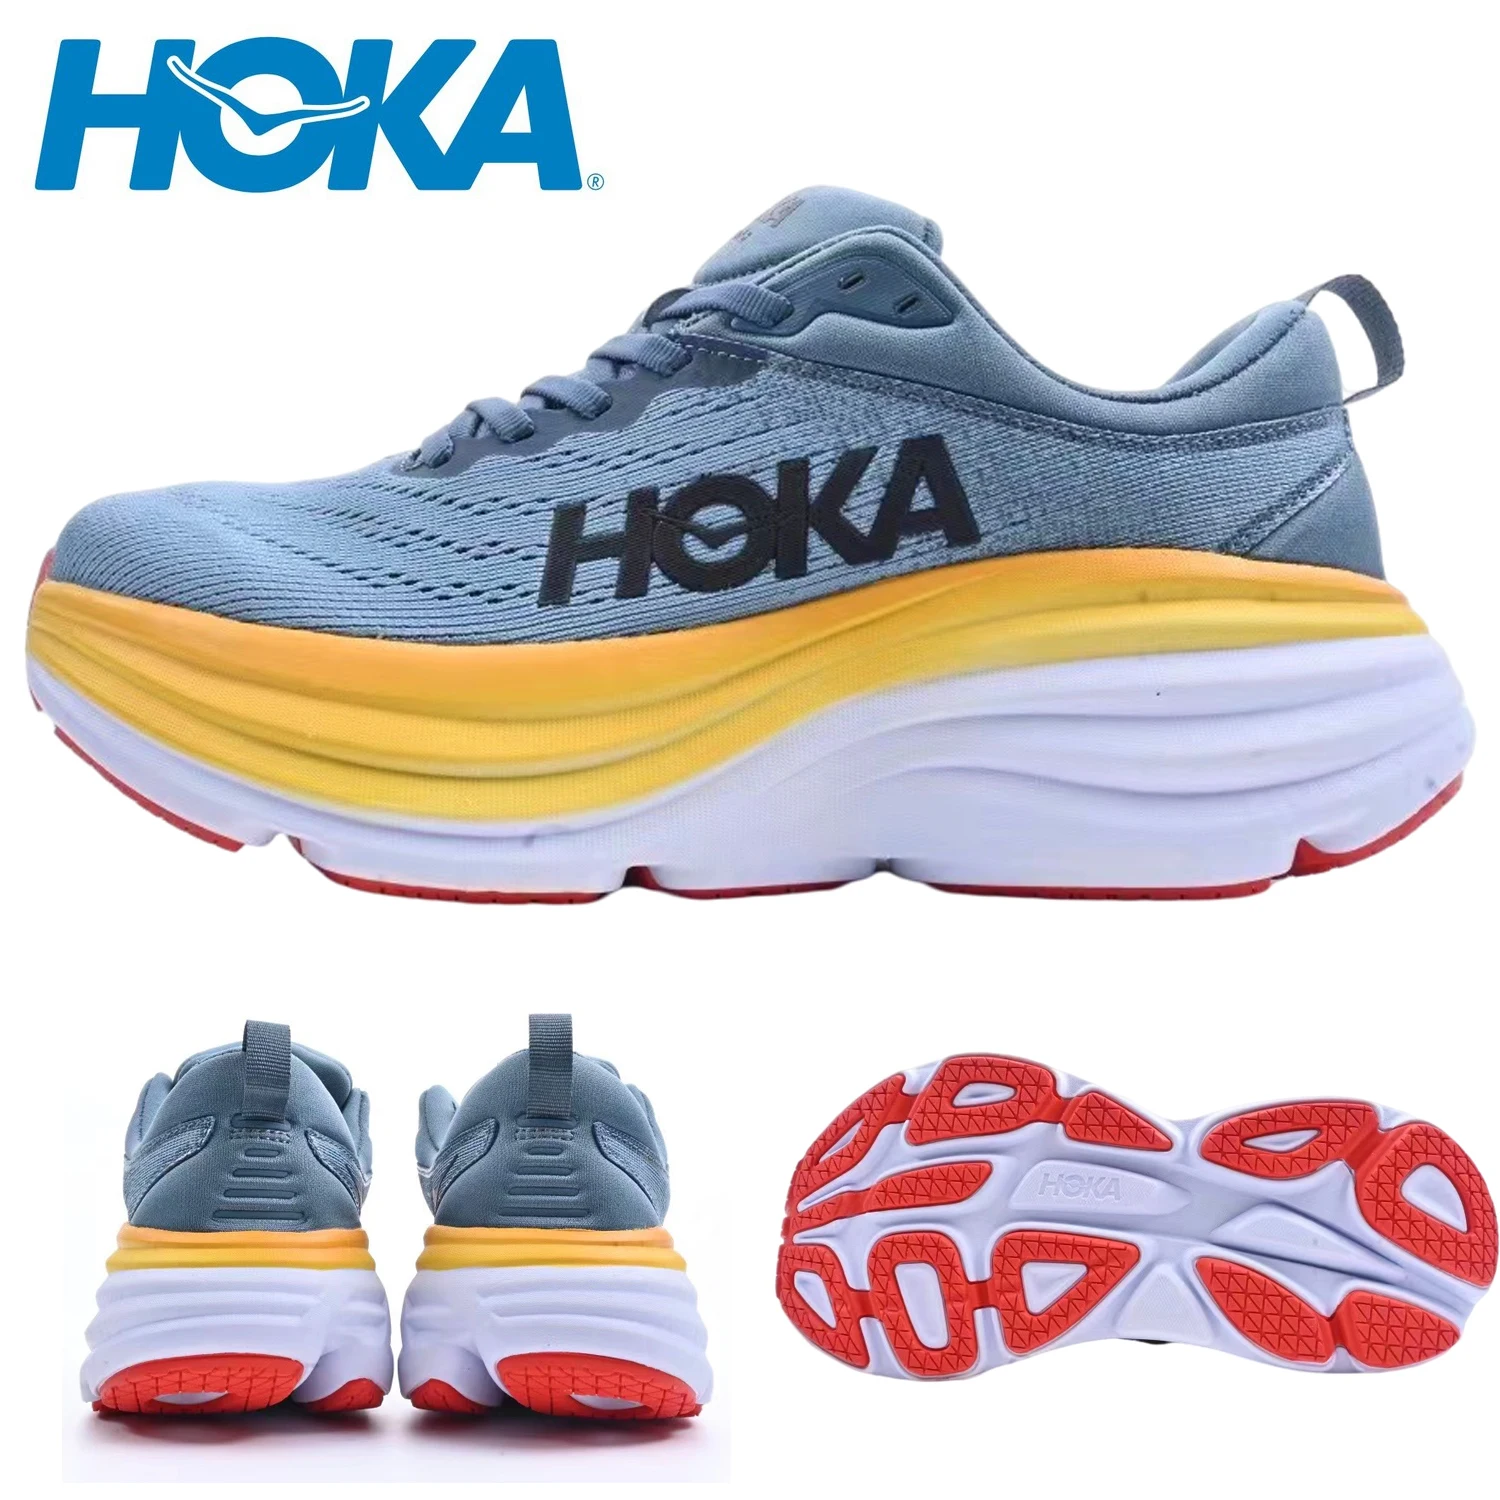 

Bondi 8 Shoes for Men Women Engineered Mesh Upper Professional Marathon Running Shoes Classic Low Sneakers from HOKA Casual Shoe